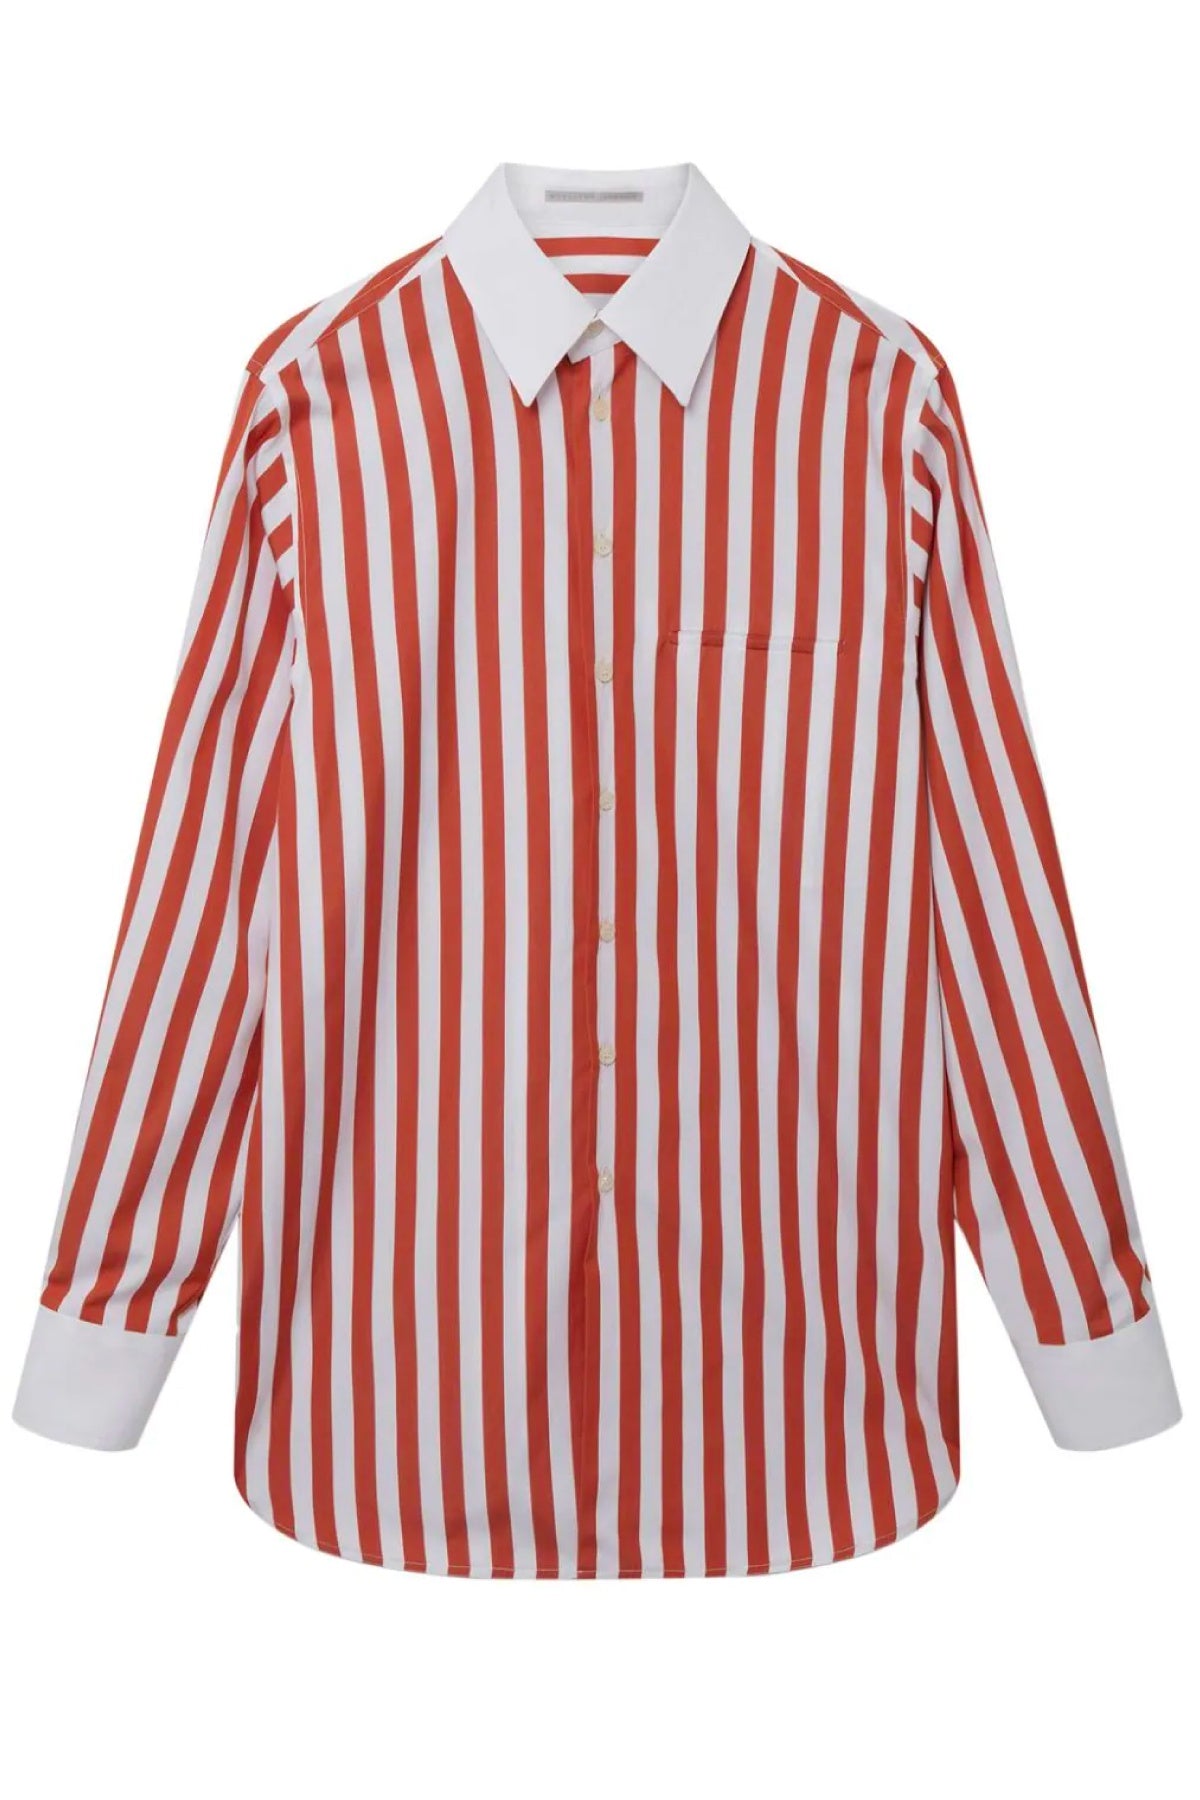 Stella McCartney Stripe Shirt - Cinnamon